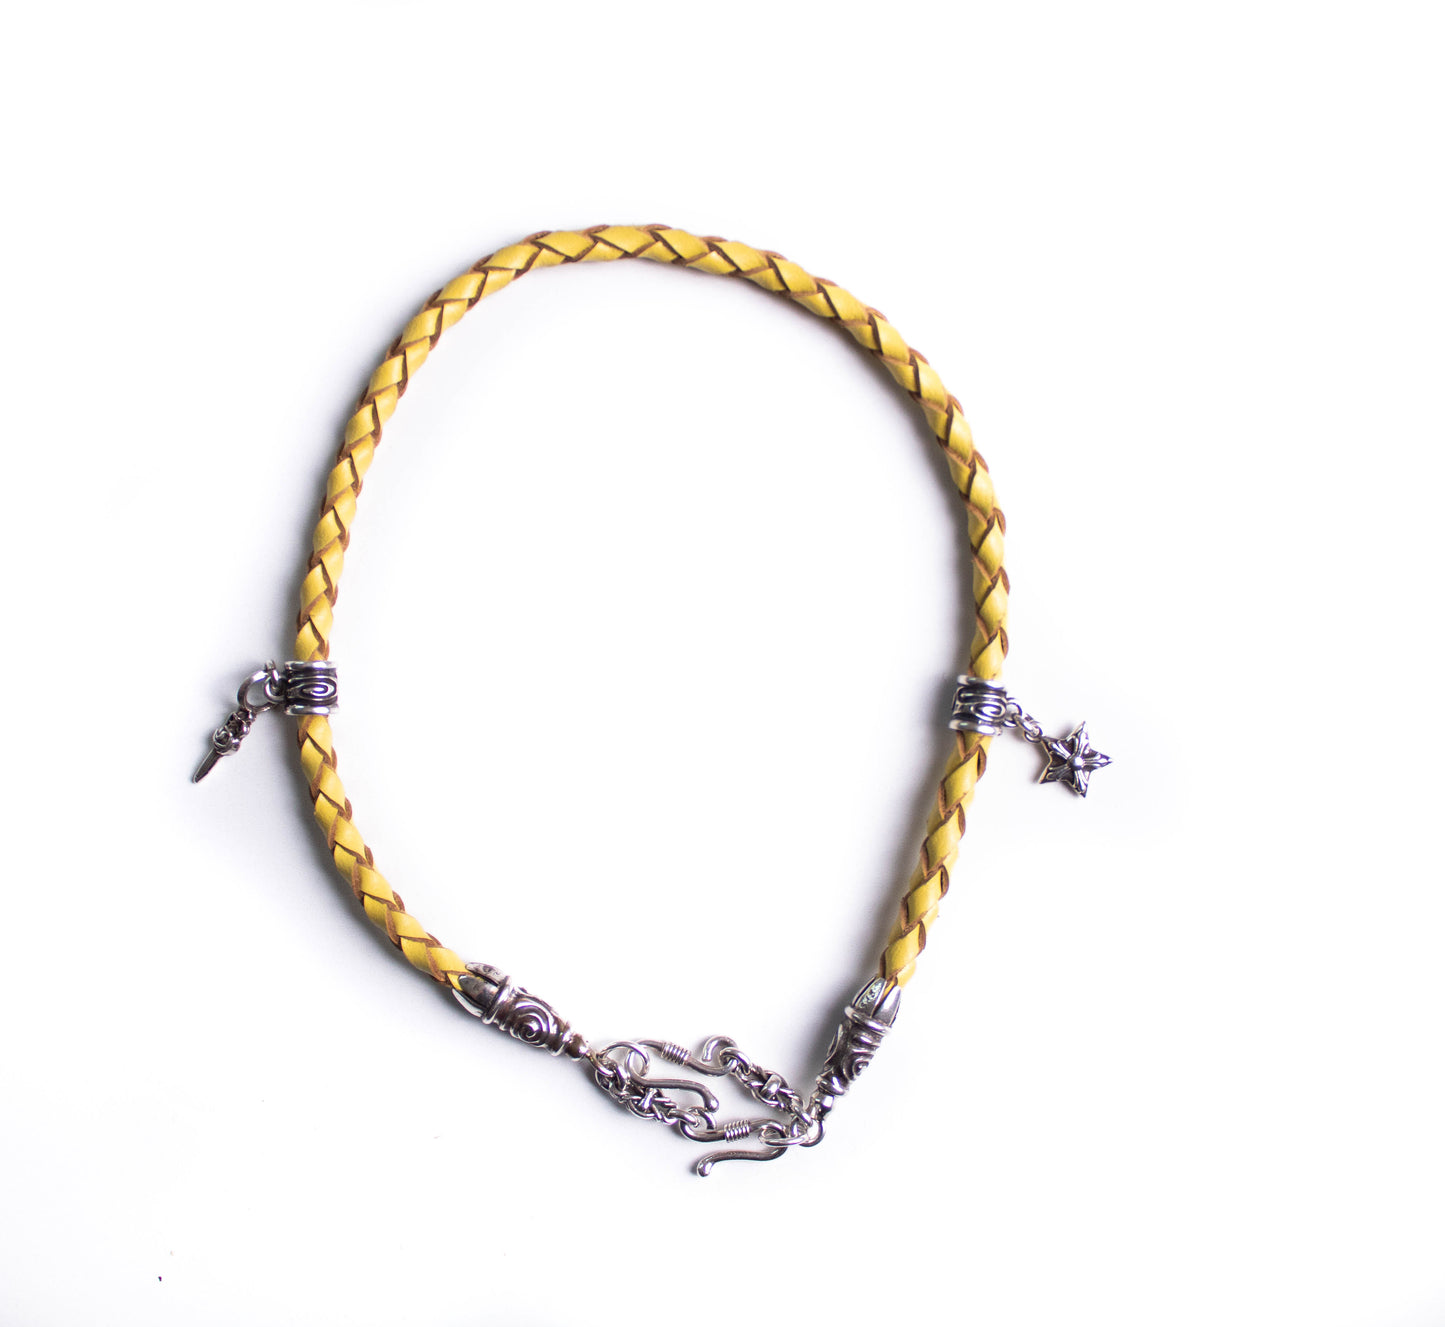 925 Sterling Silver & Genuine Leather Bracelet/Choker/Strap 4 strands Hand-braided.- P02